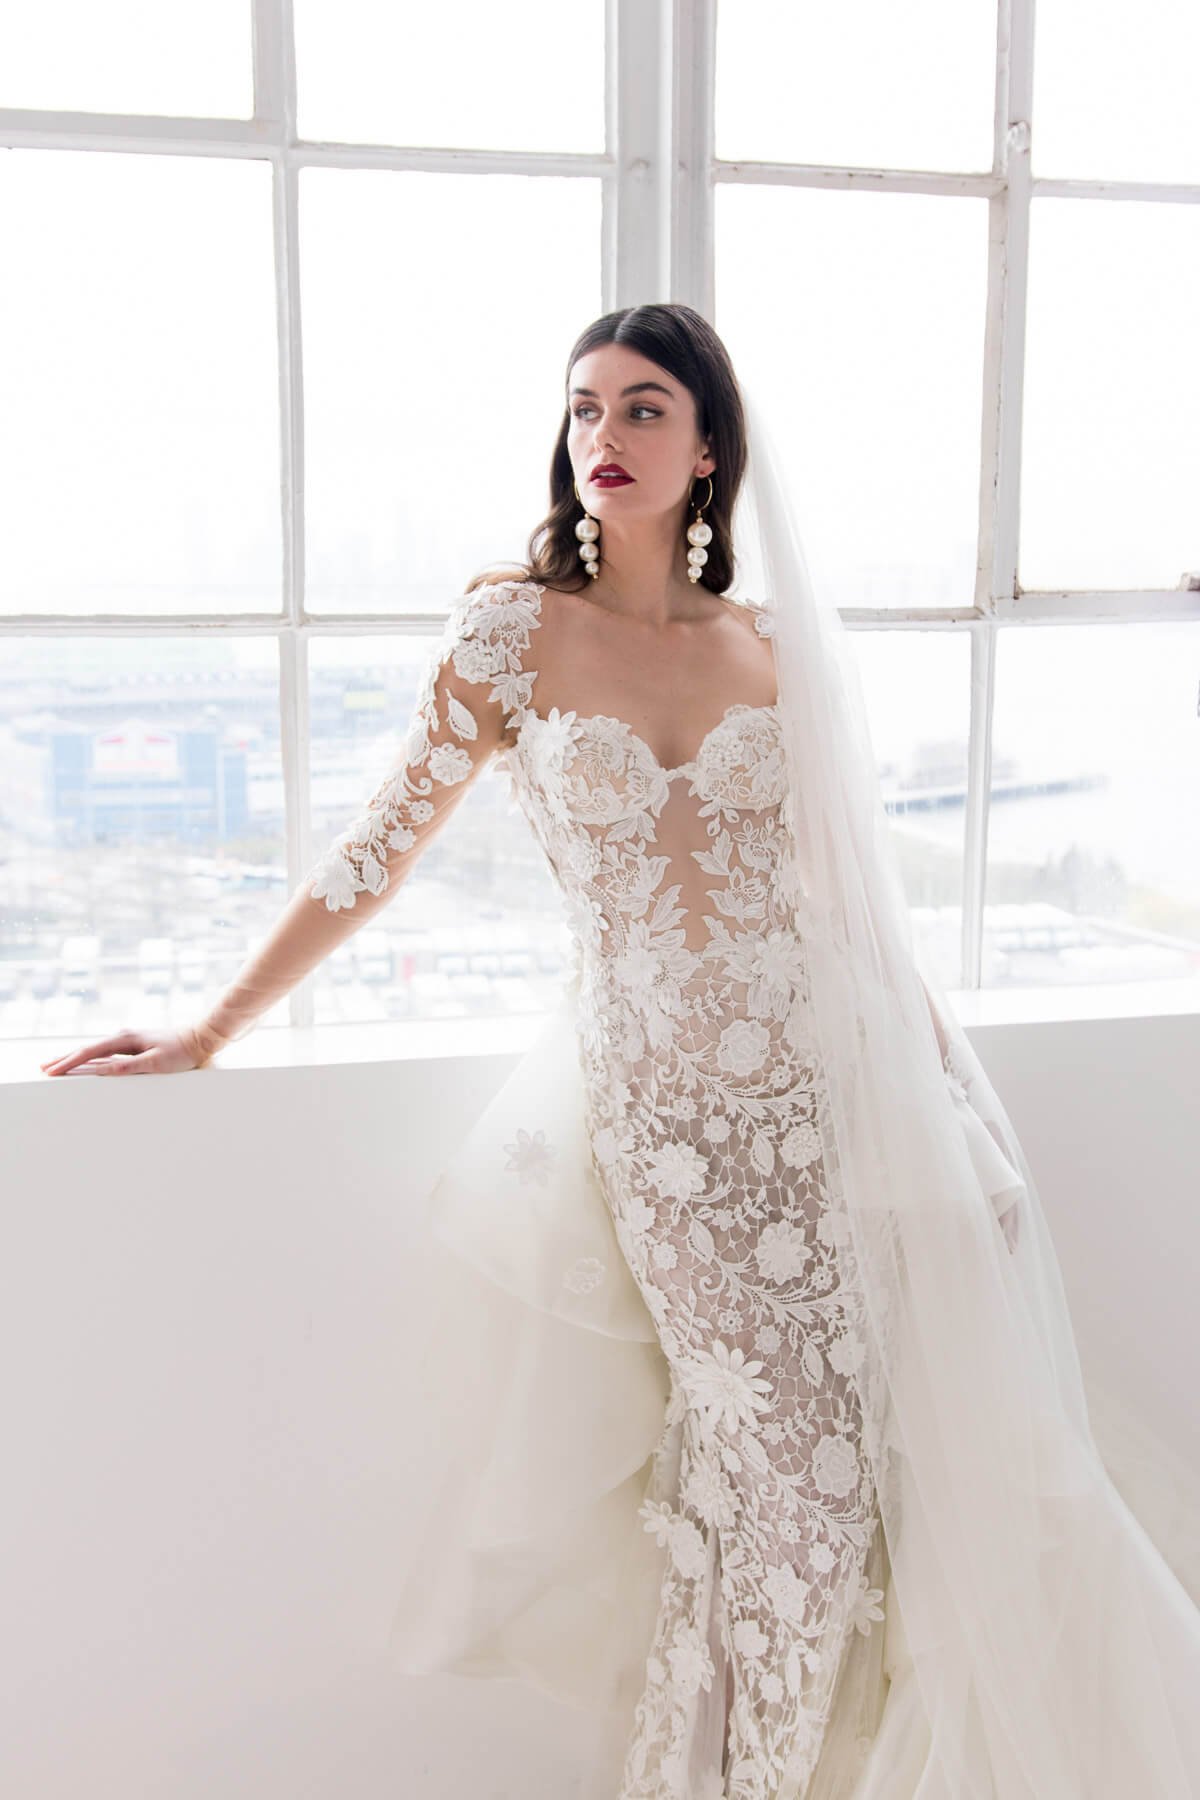 Morgan Newsom Galia Lahav wedding dress designer New York photographer-0676.jpg